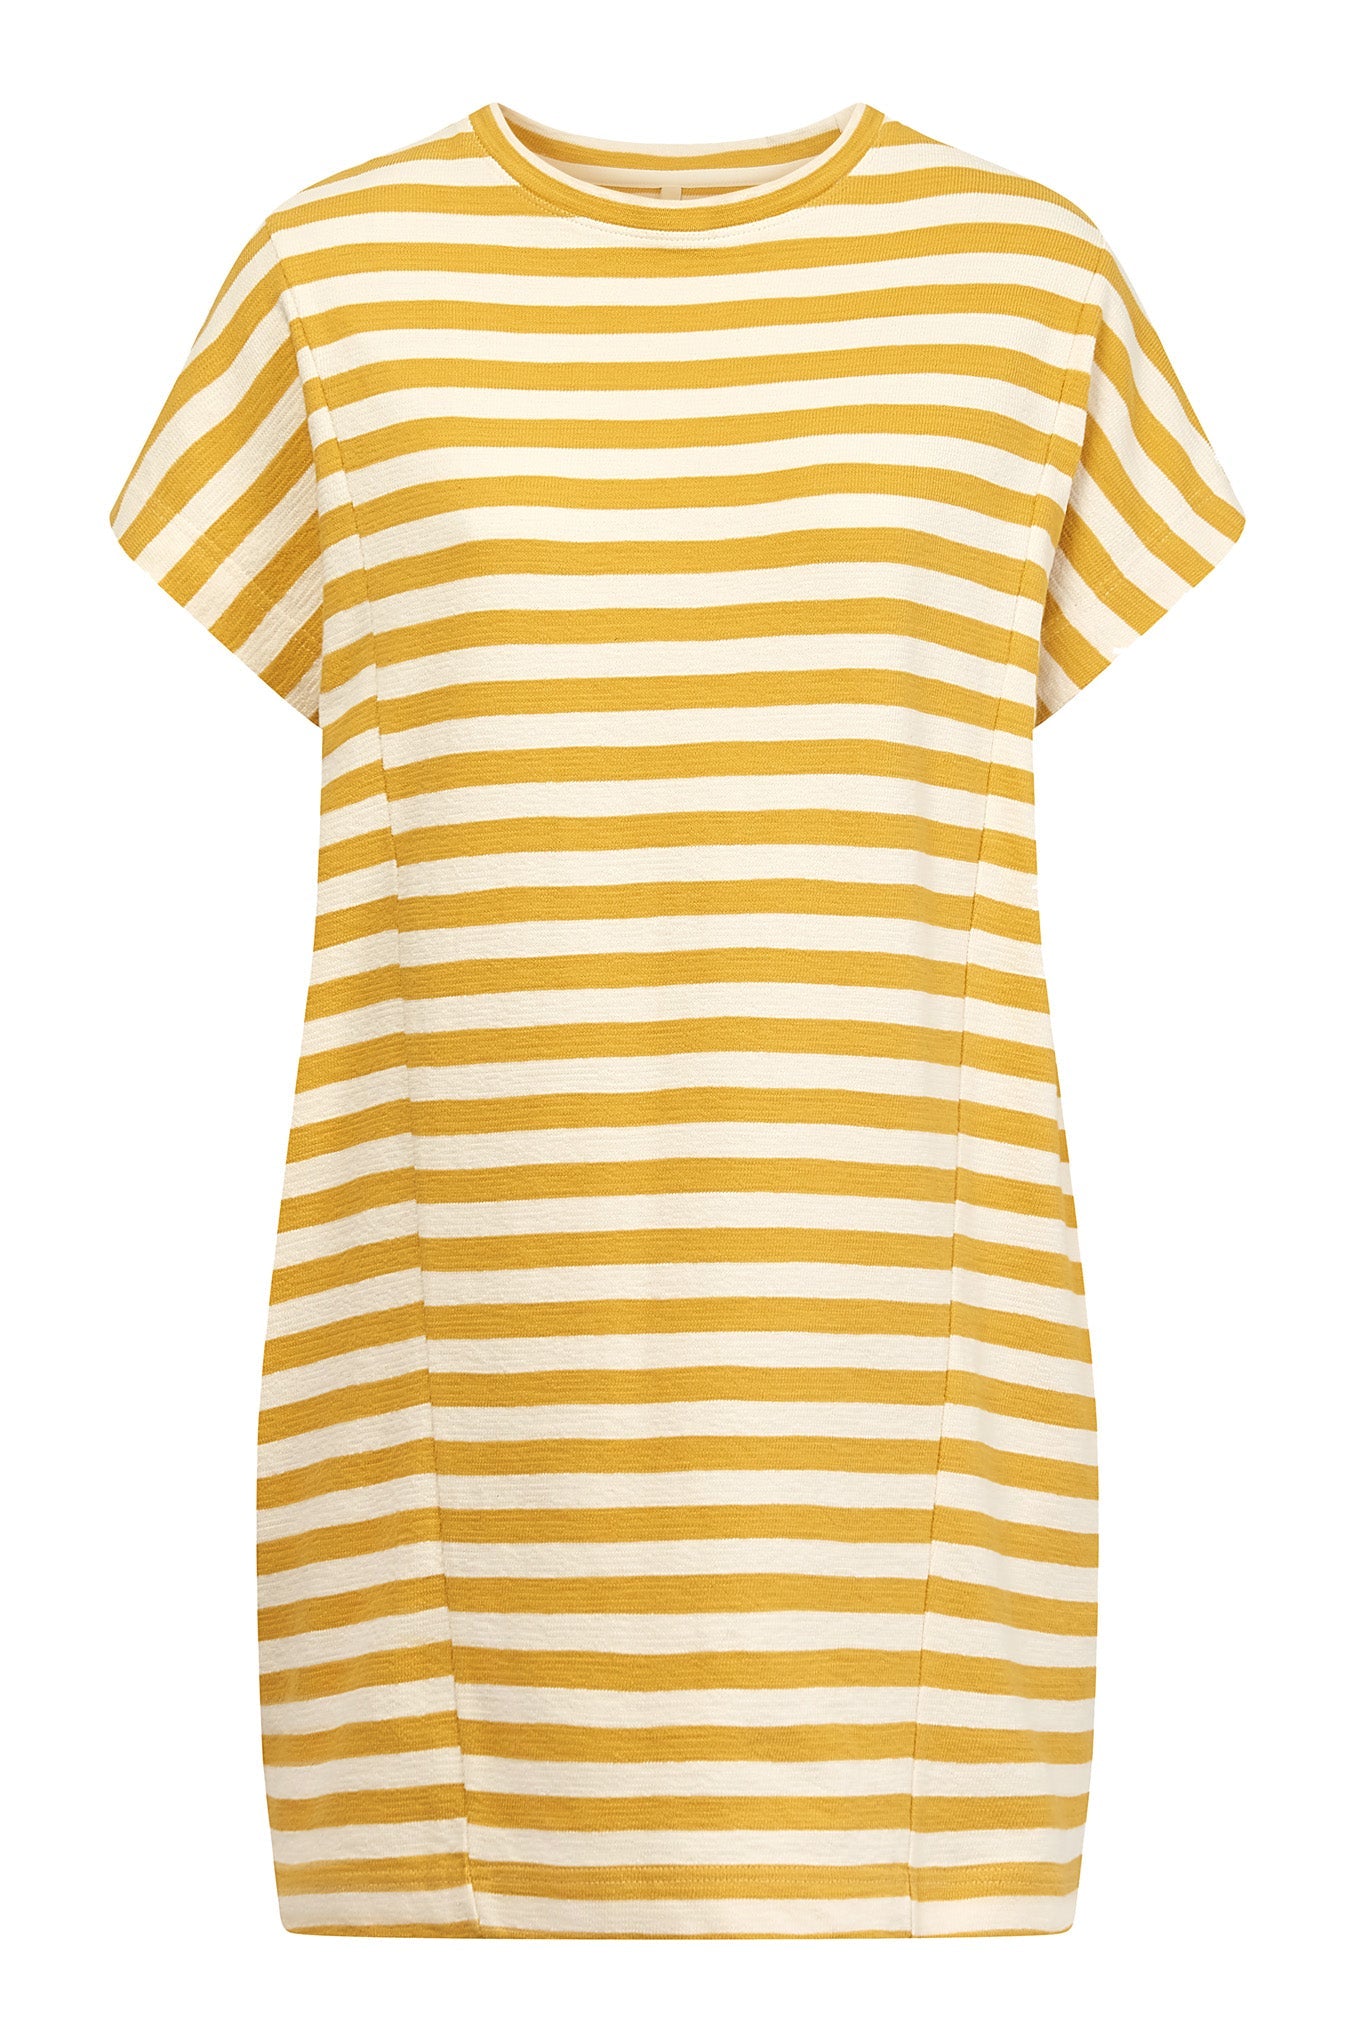 Yellow and white striped, short-sleeved dress YASUKO made of organic cotton by Komodo